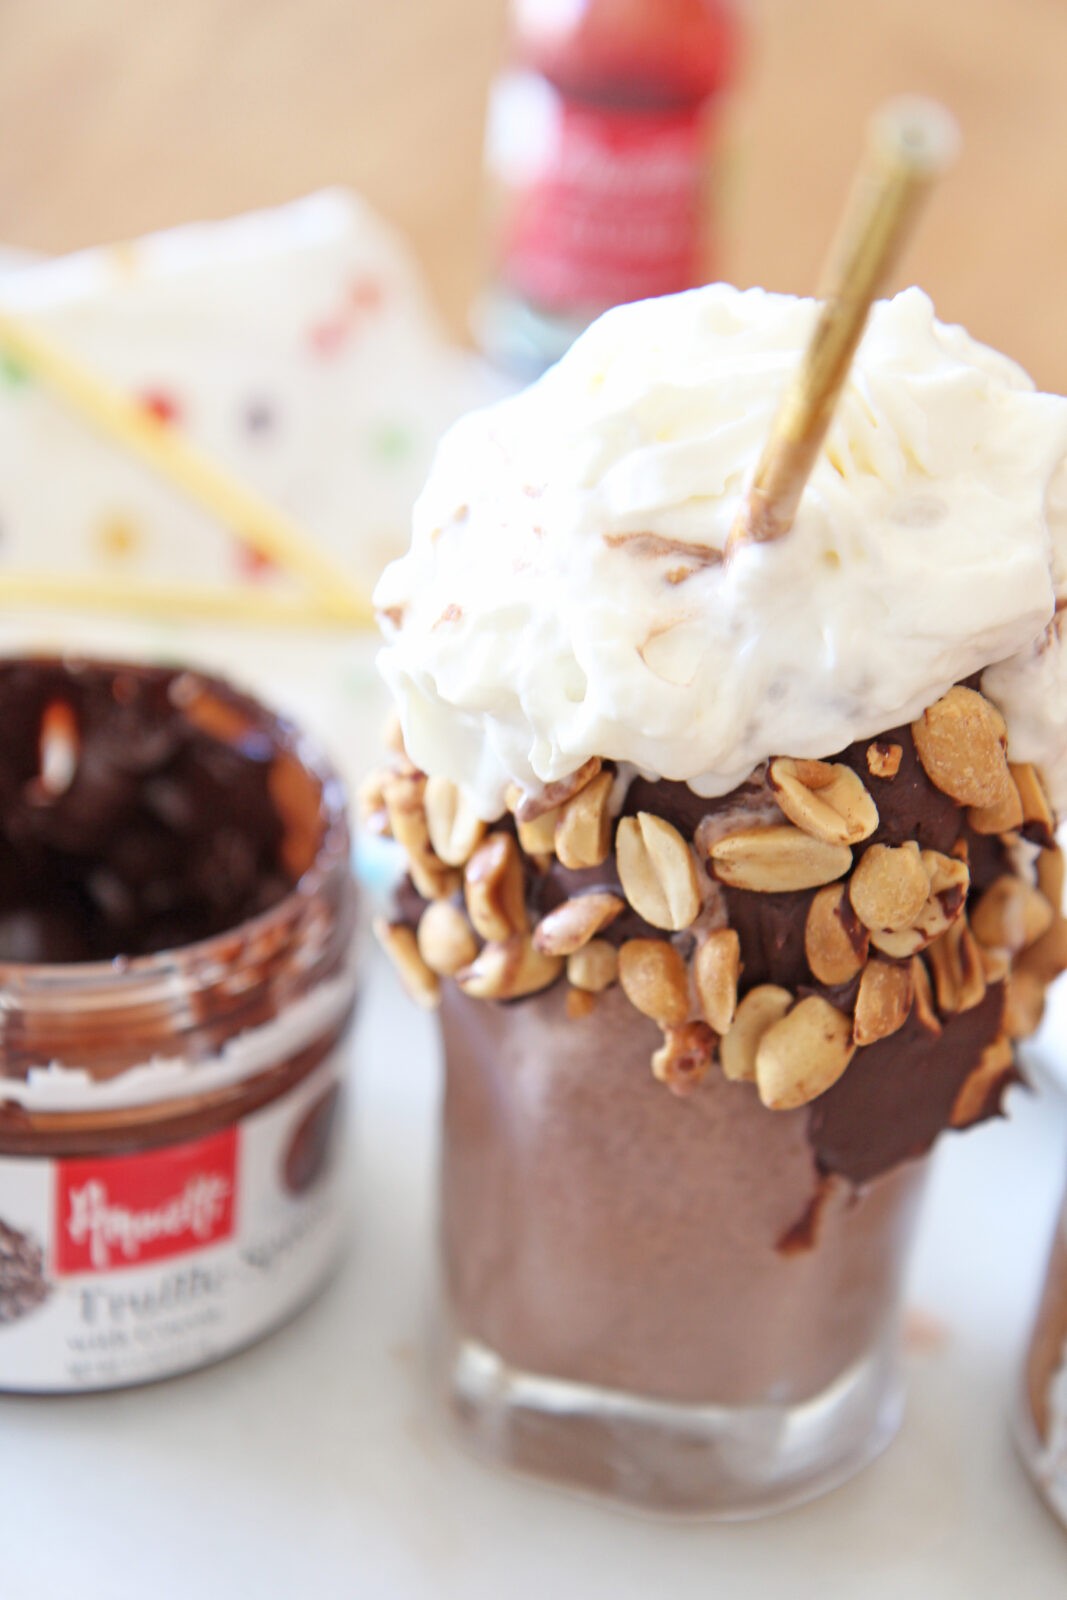 Treat Yourself Chocolate Ice Cream Shake Recipe. Chocolate ice cream, whipped cream, syrup, and jam makes this decadent.